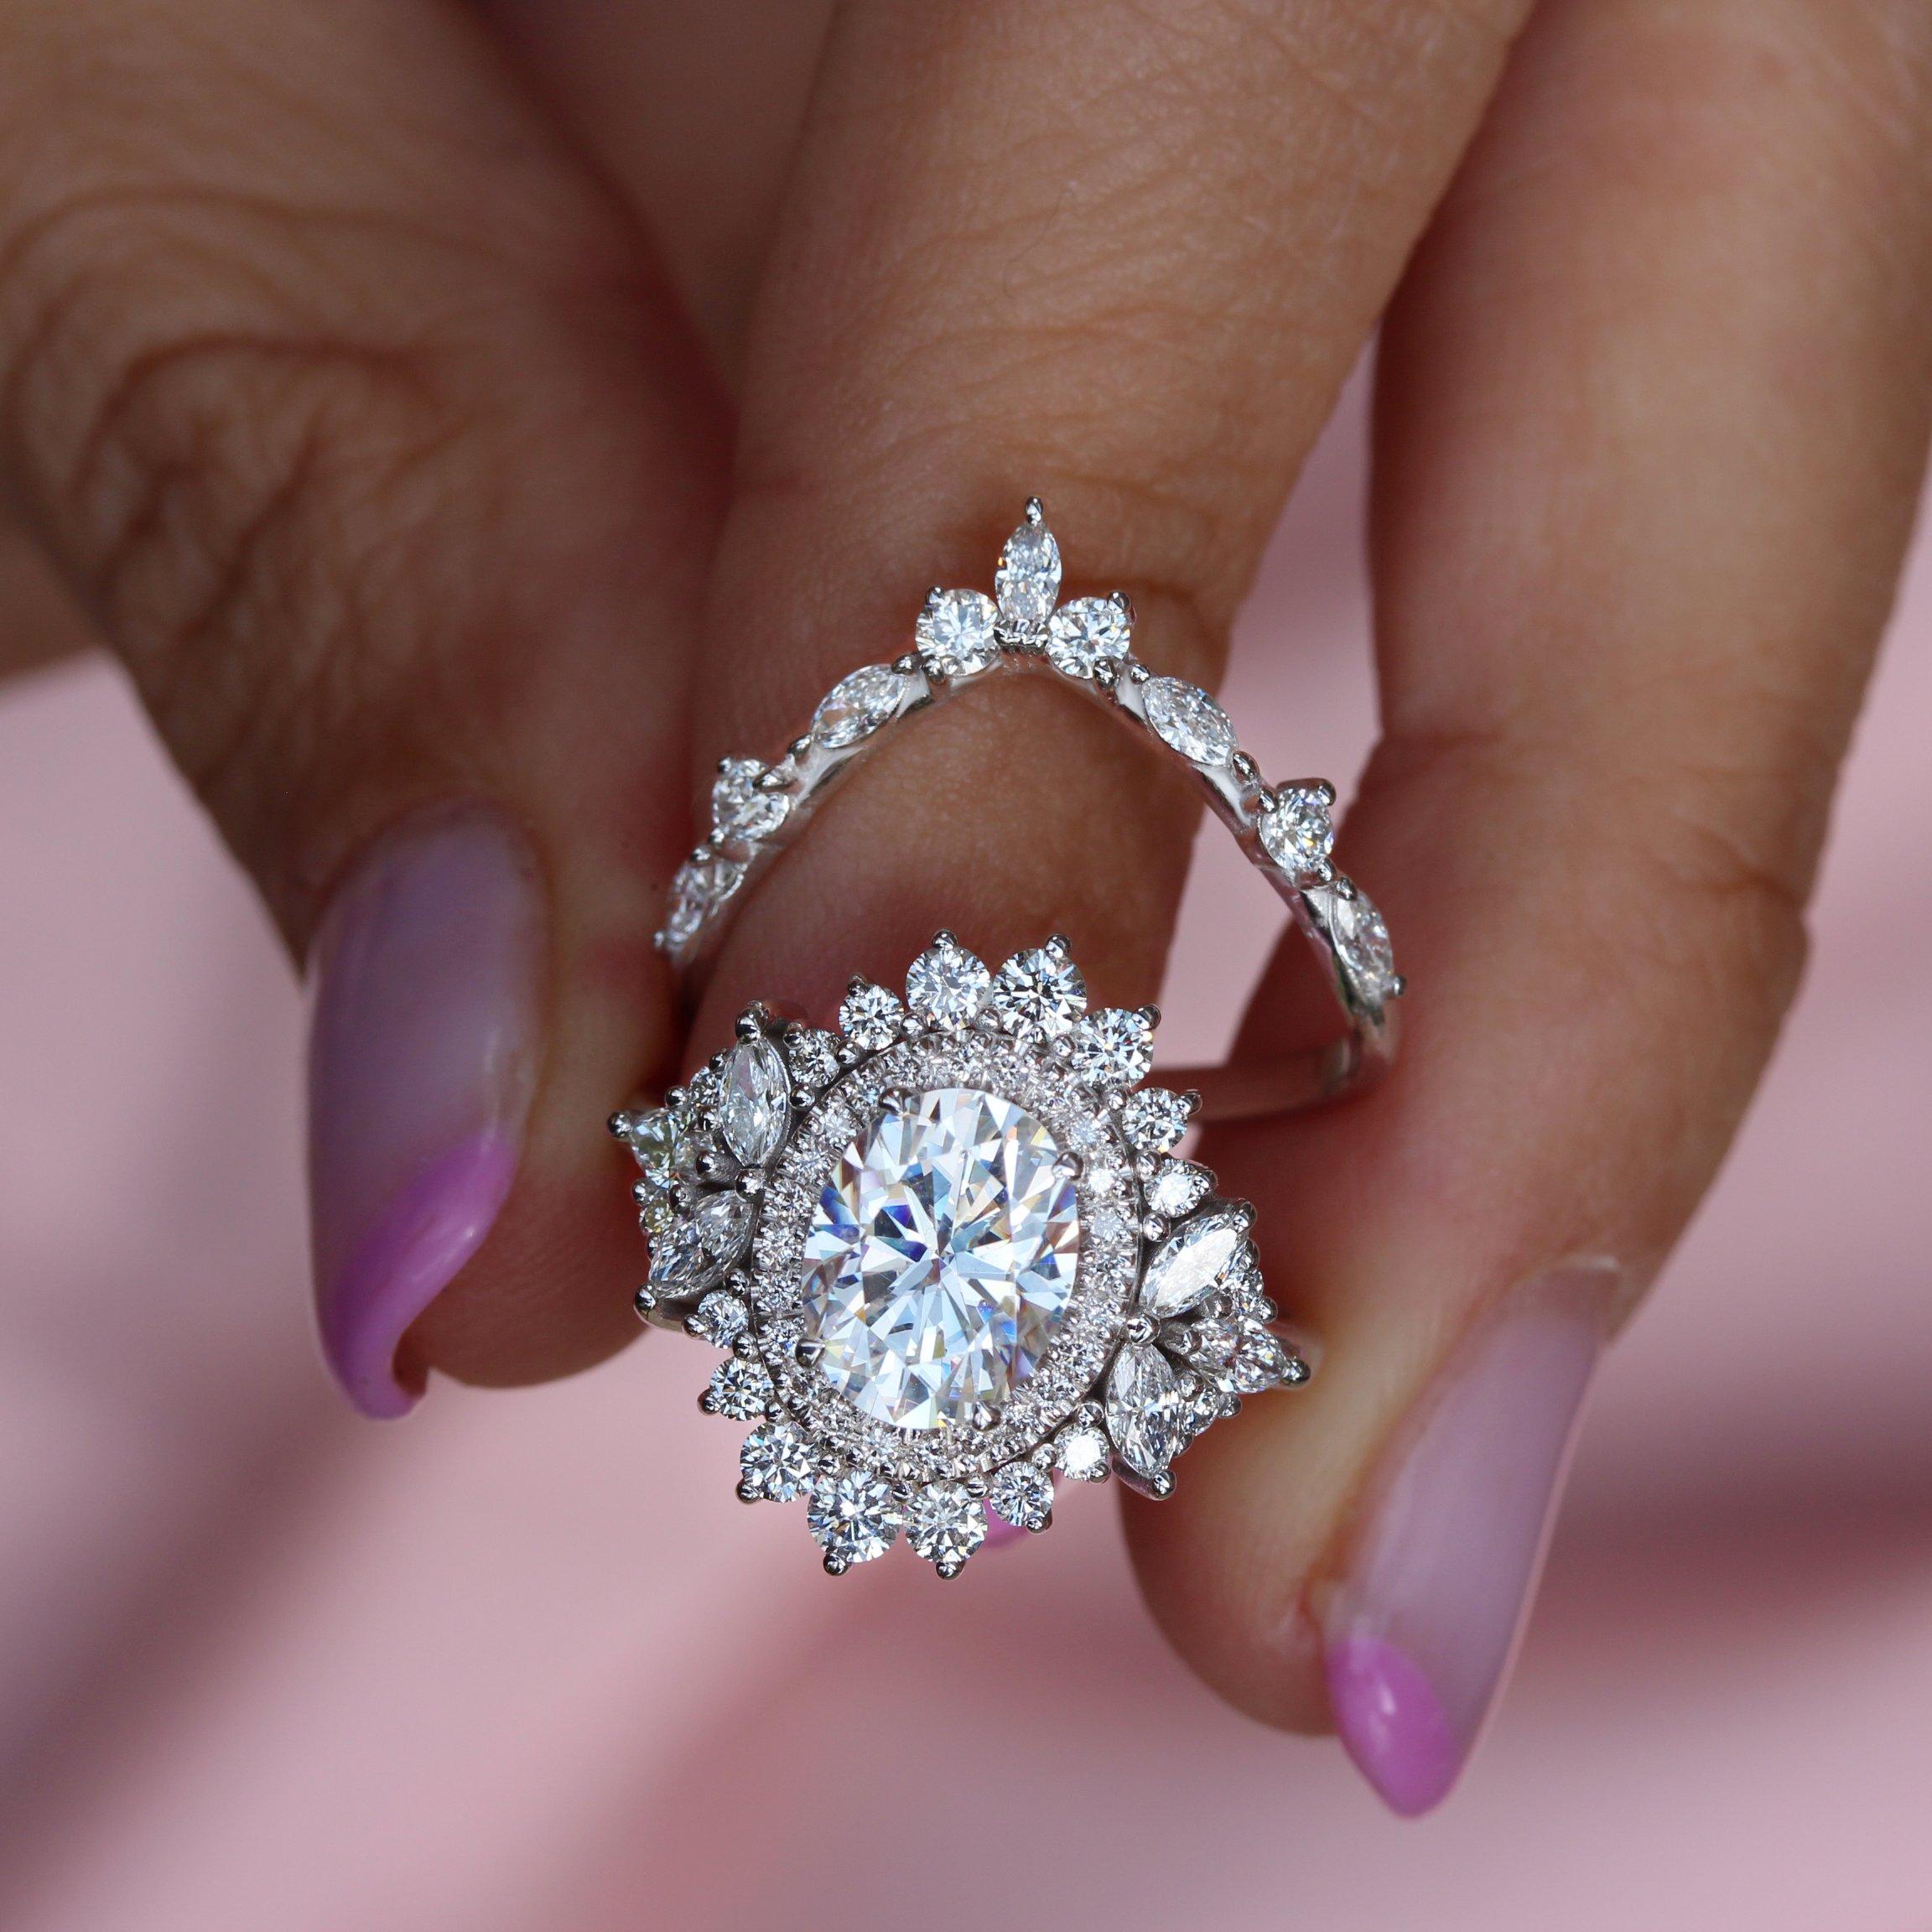 1.5 carat oval diamond ring with halo